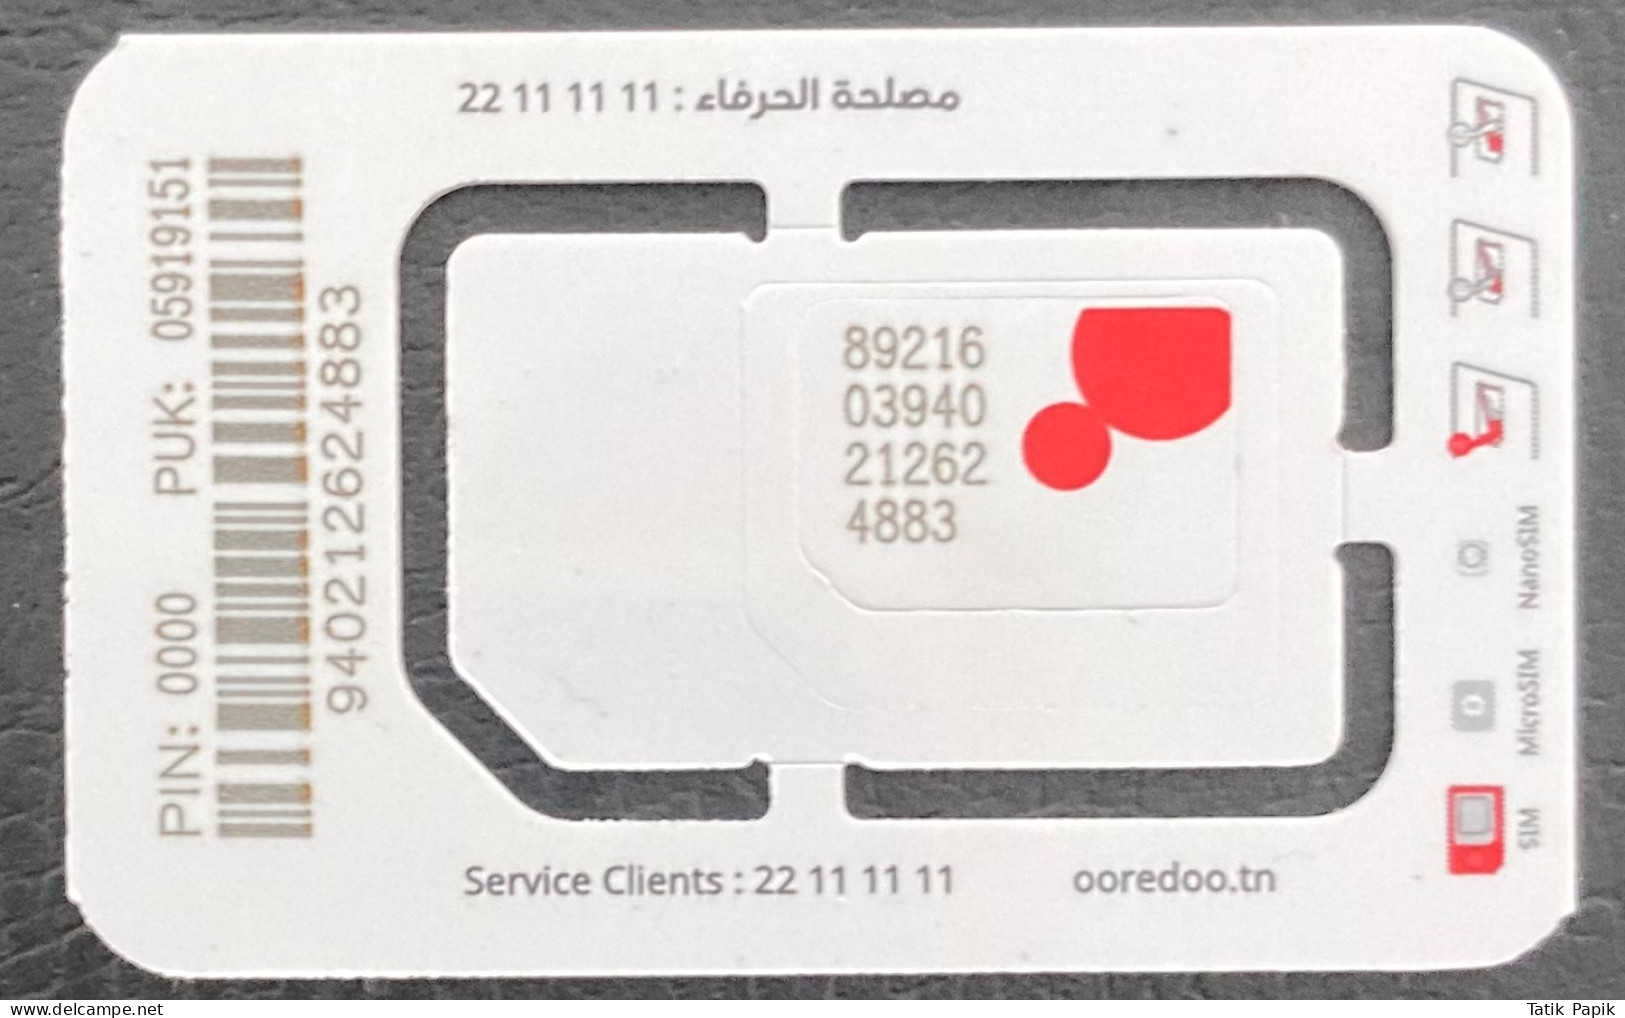 Tunisie Tunisia Ooredeoo Telecom GSM  Nano SIM Card New UNC Logo 3G 4G 5G Red White - Tunisia